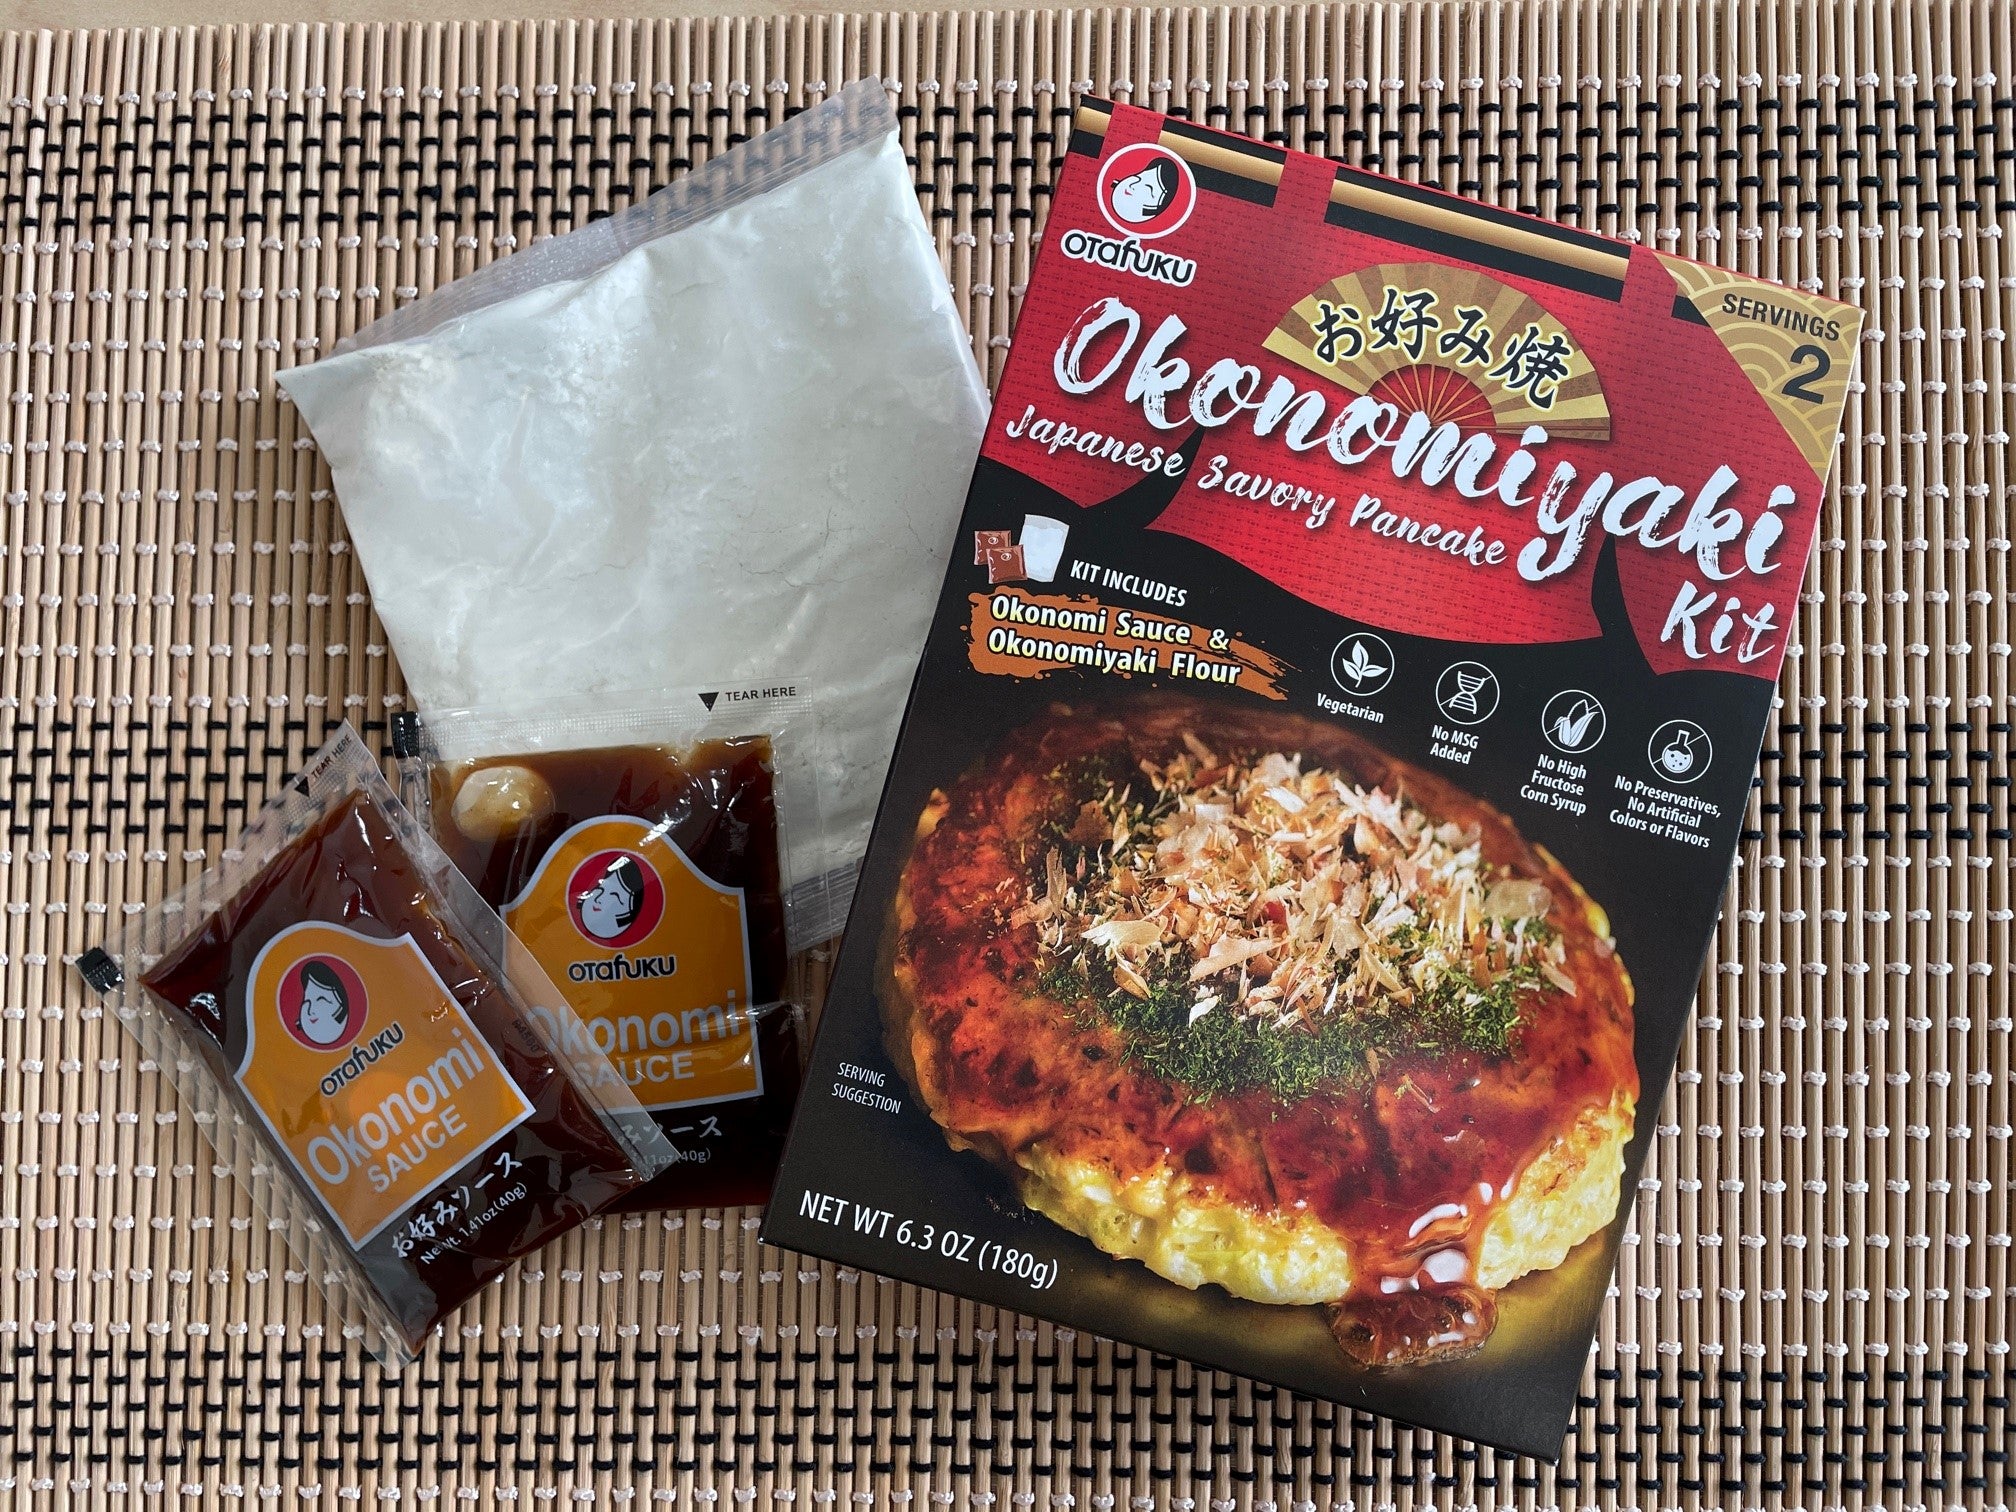 Chicken Ramen Okonomiyaki Making Kit 